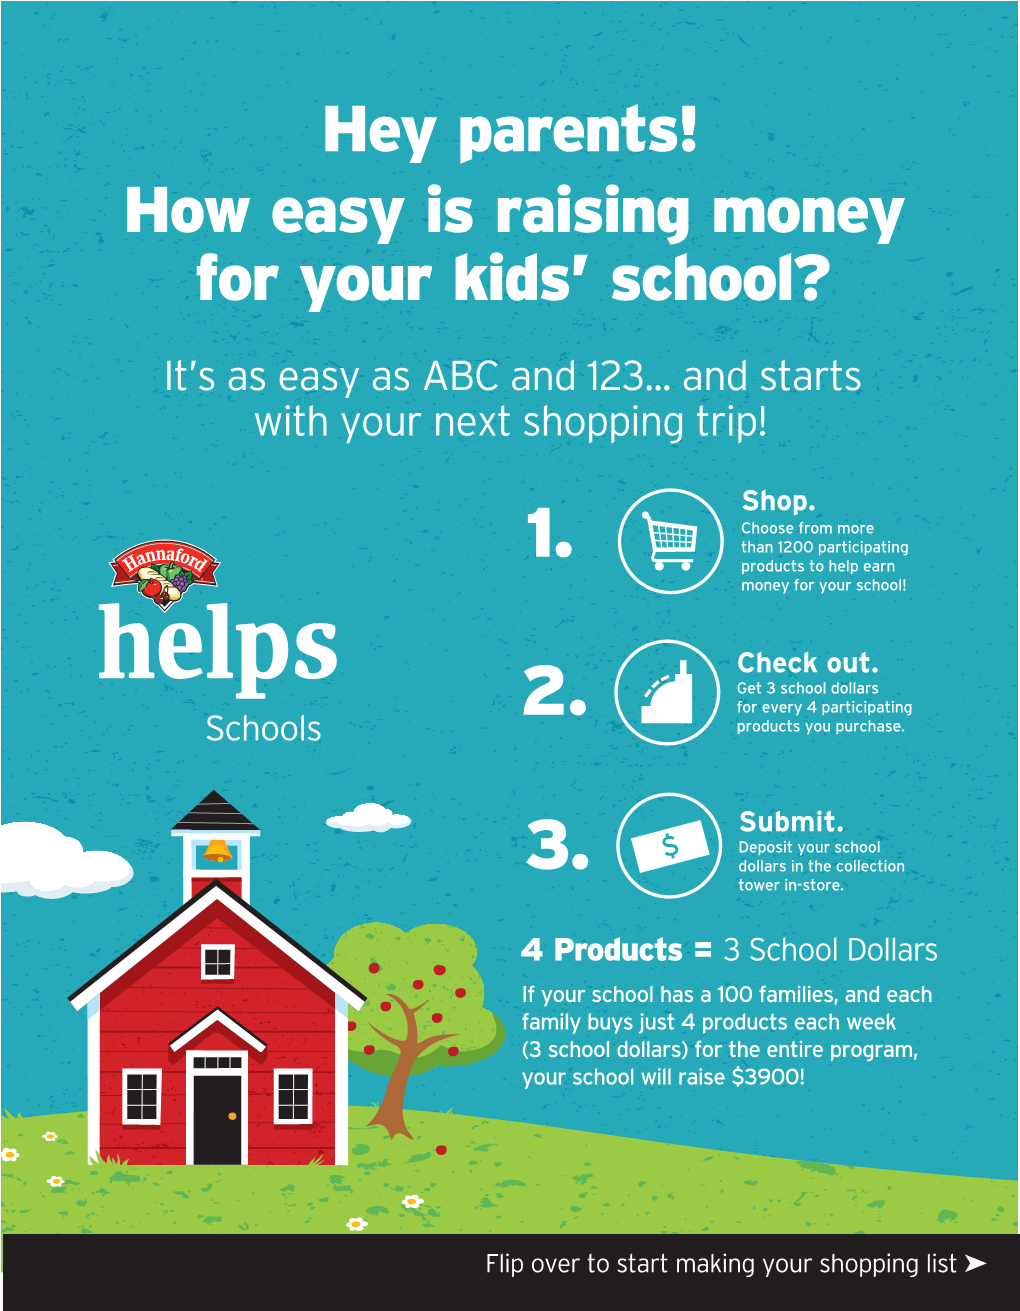 How Easy Is Raising Money for Your Kids' School?